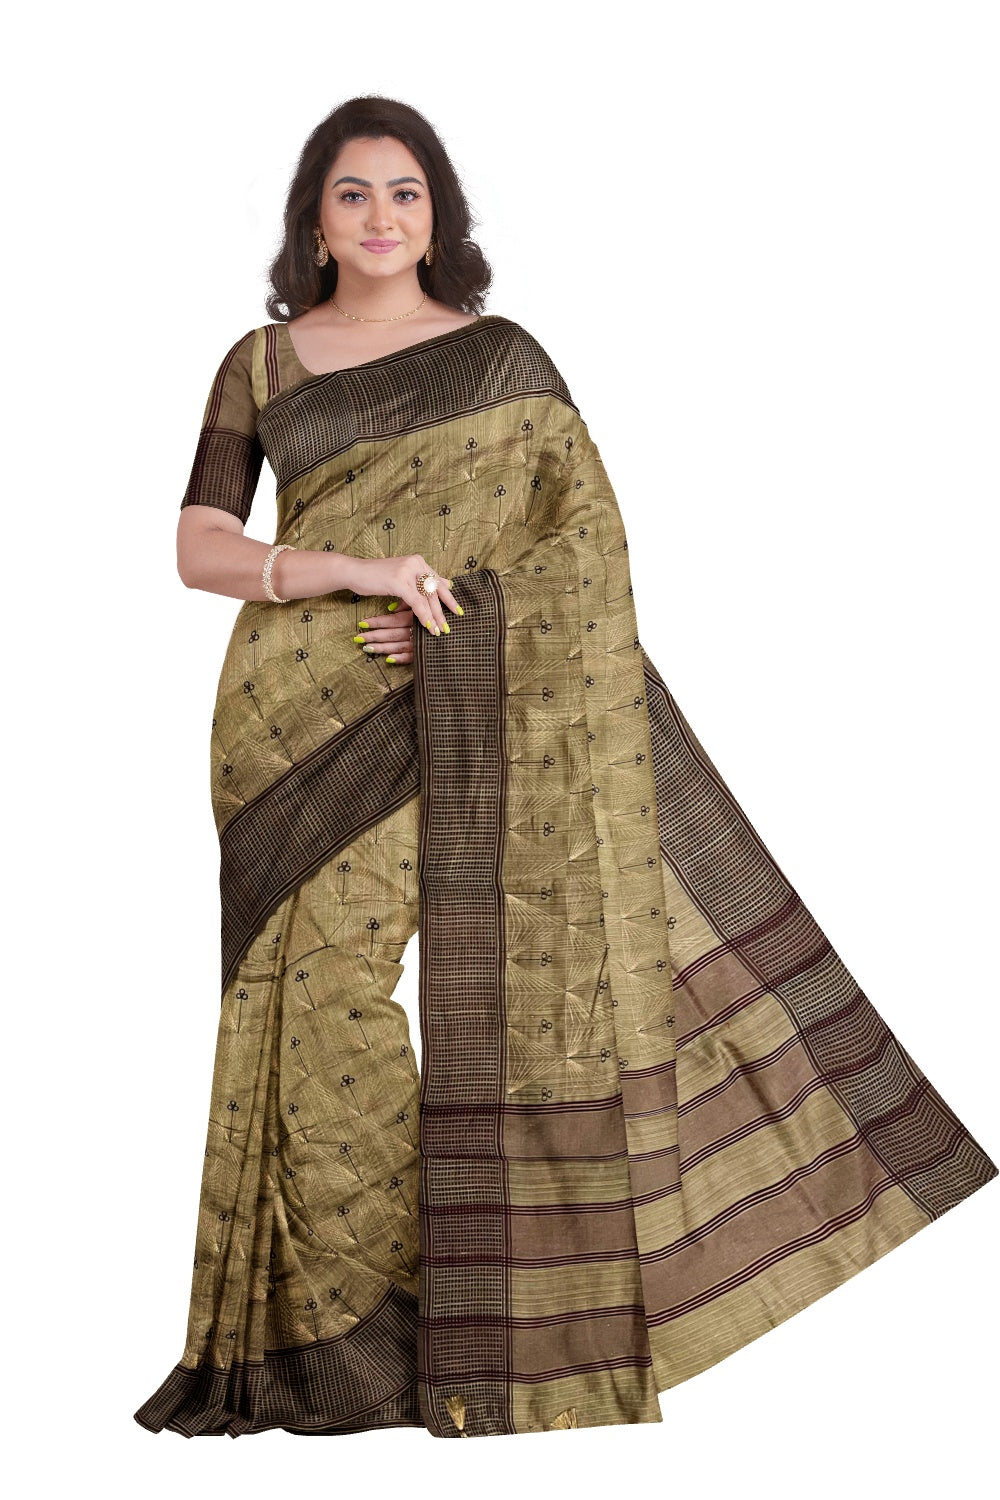 Southloom Light Brown Semi Silk Designer Thread Work Saree with Tassels on Pallu